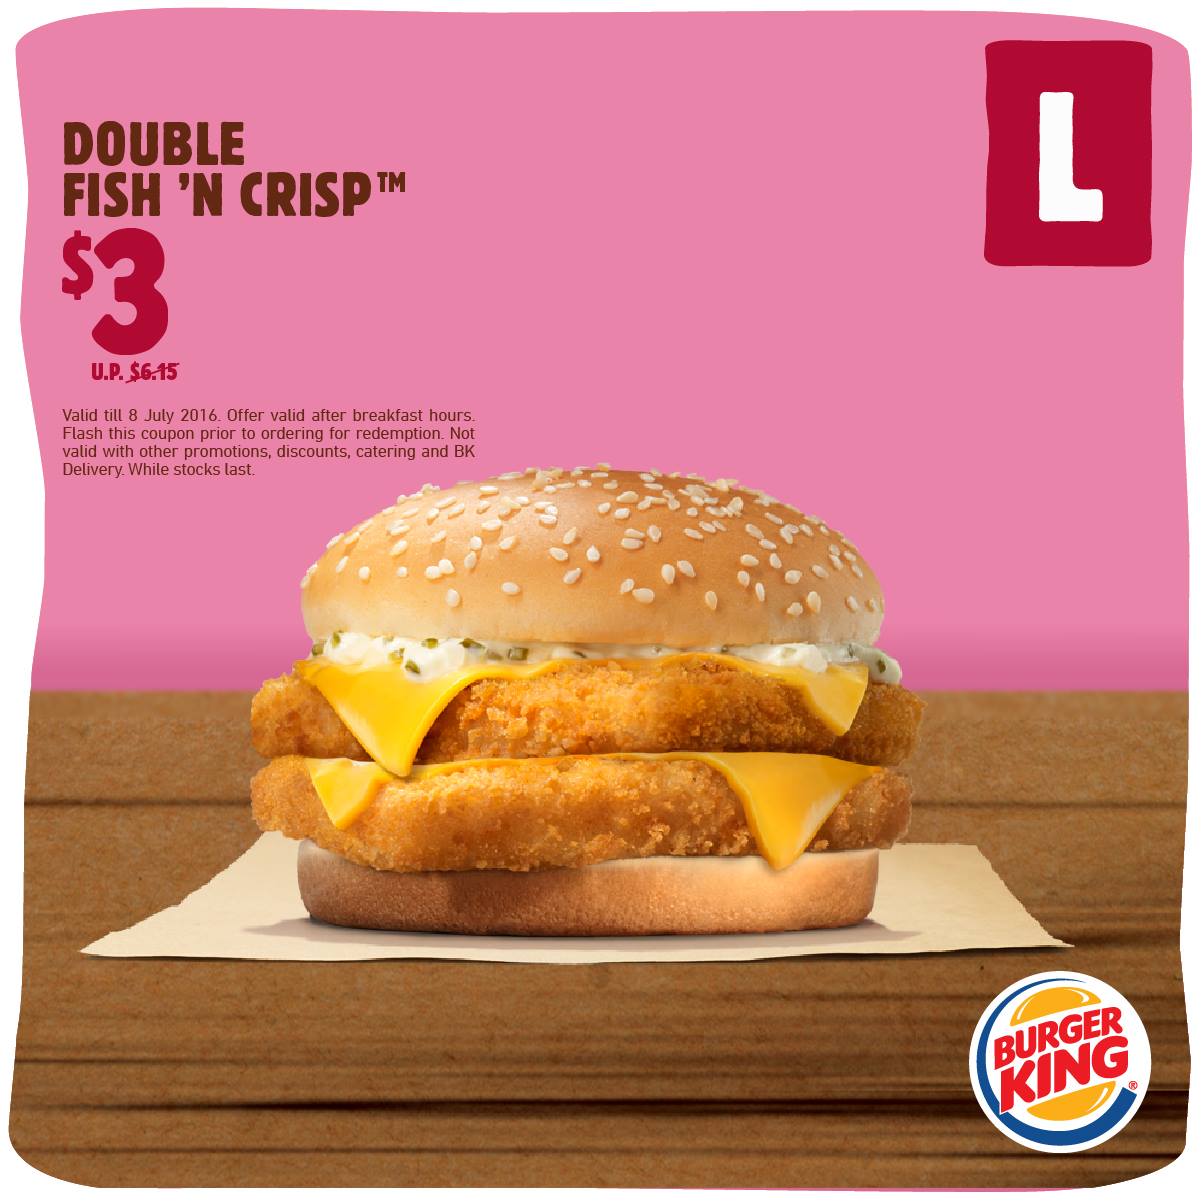 Burger King $3 Double Fish ‘N Crisp Singapore Promotion ends 8 Jul 2016